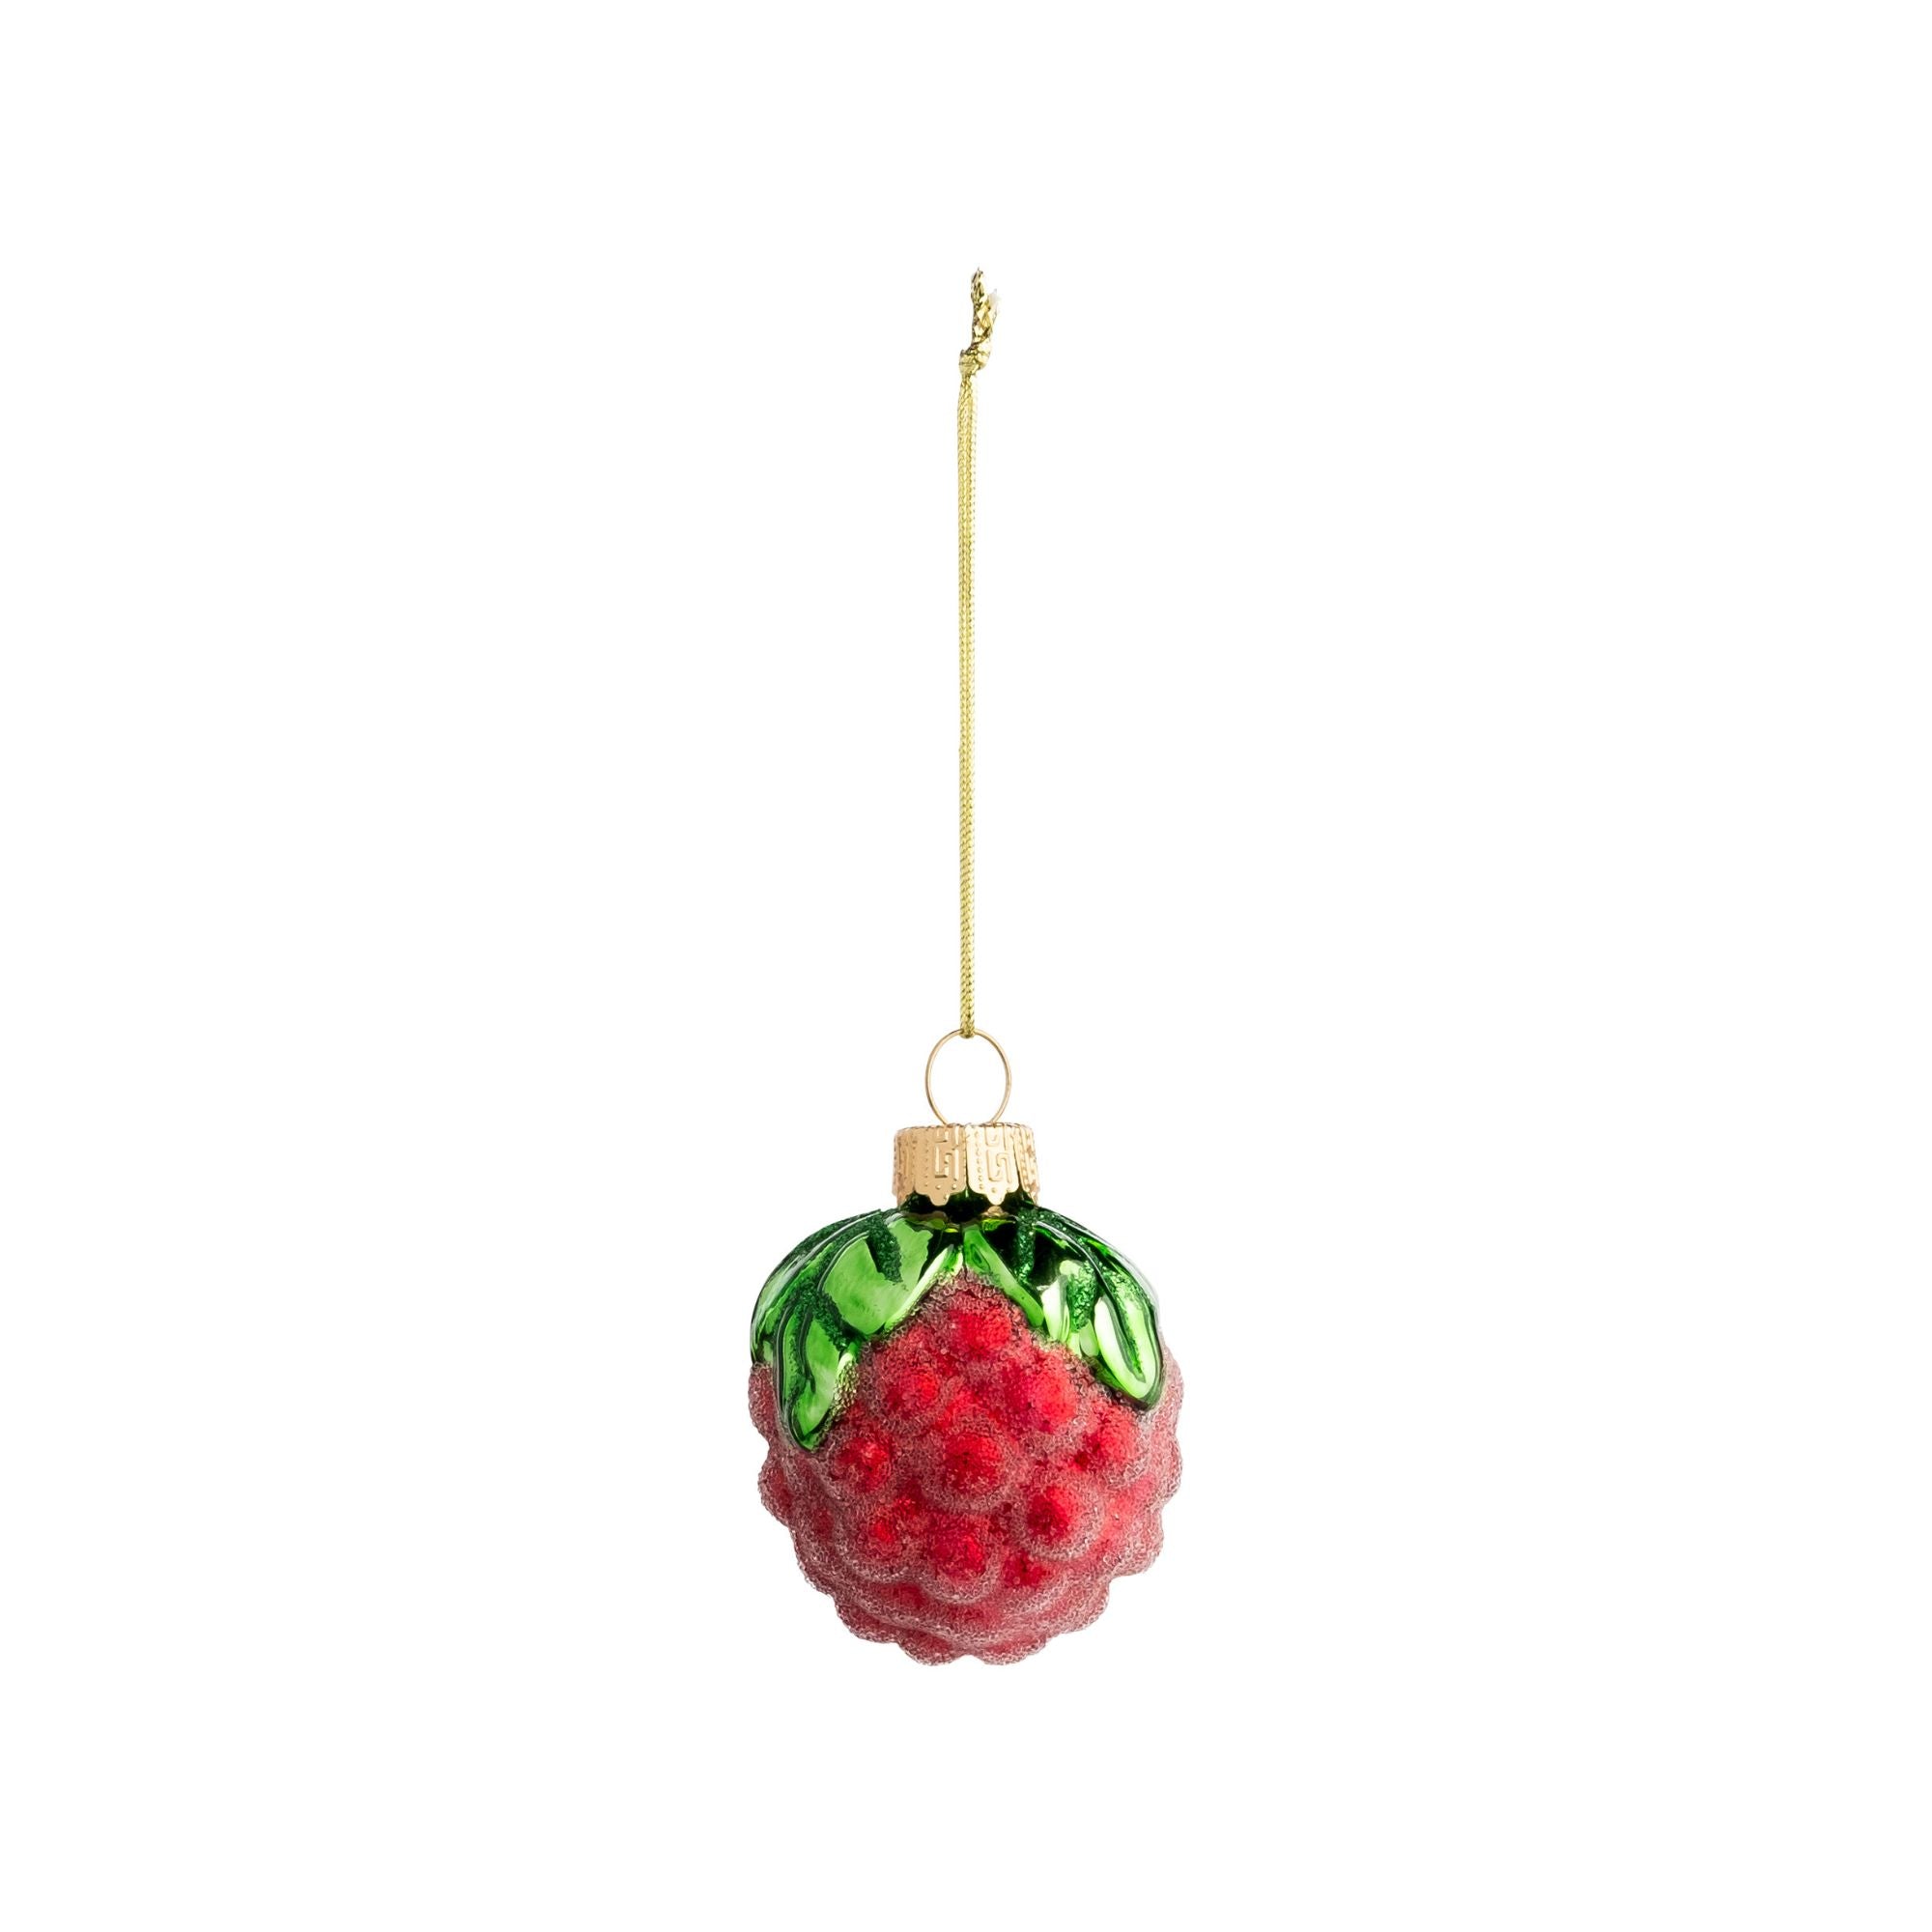 Raspberry Ornament - Set of 2